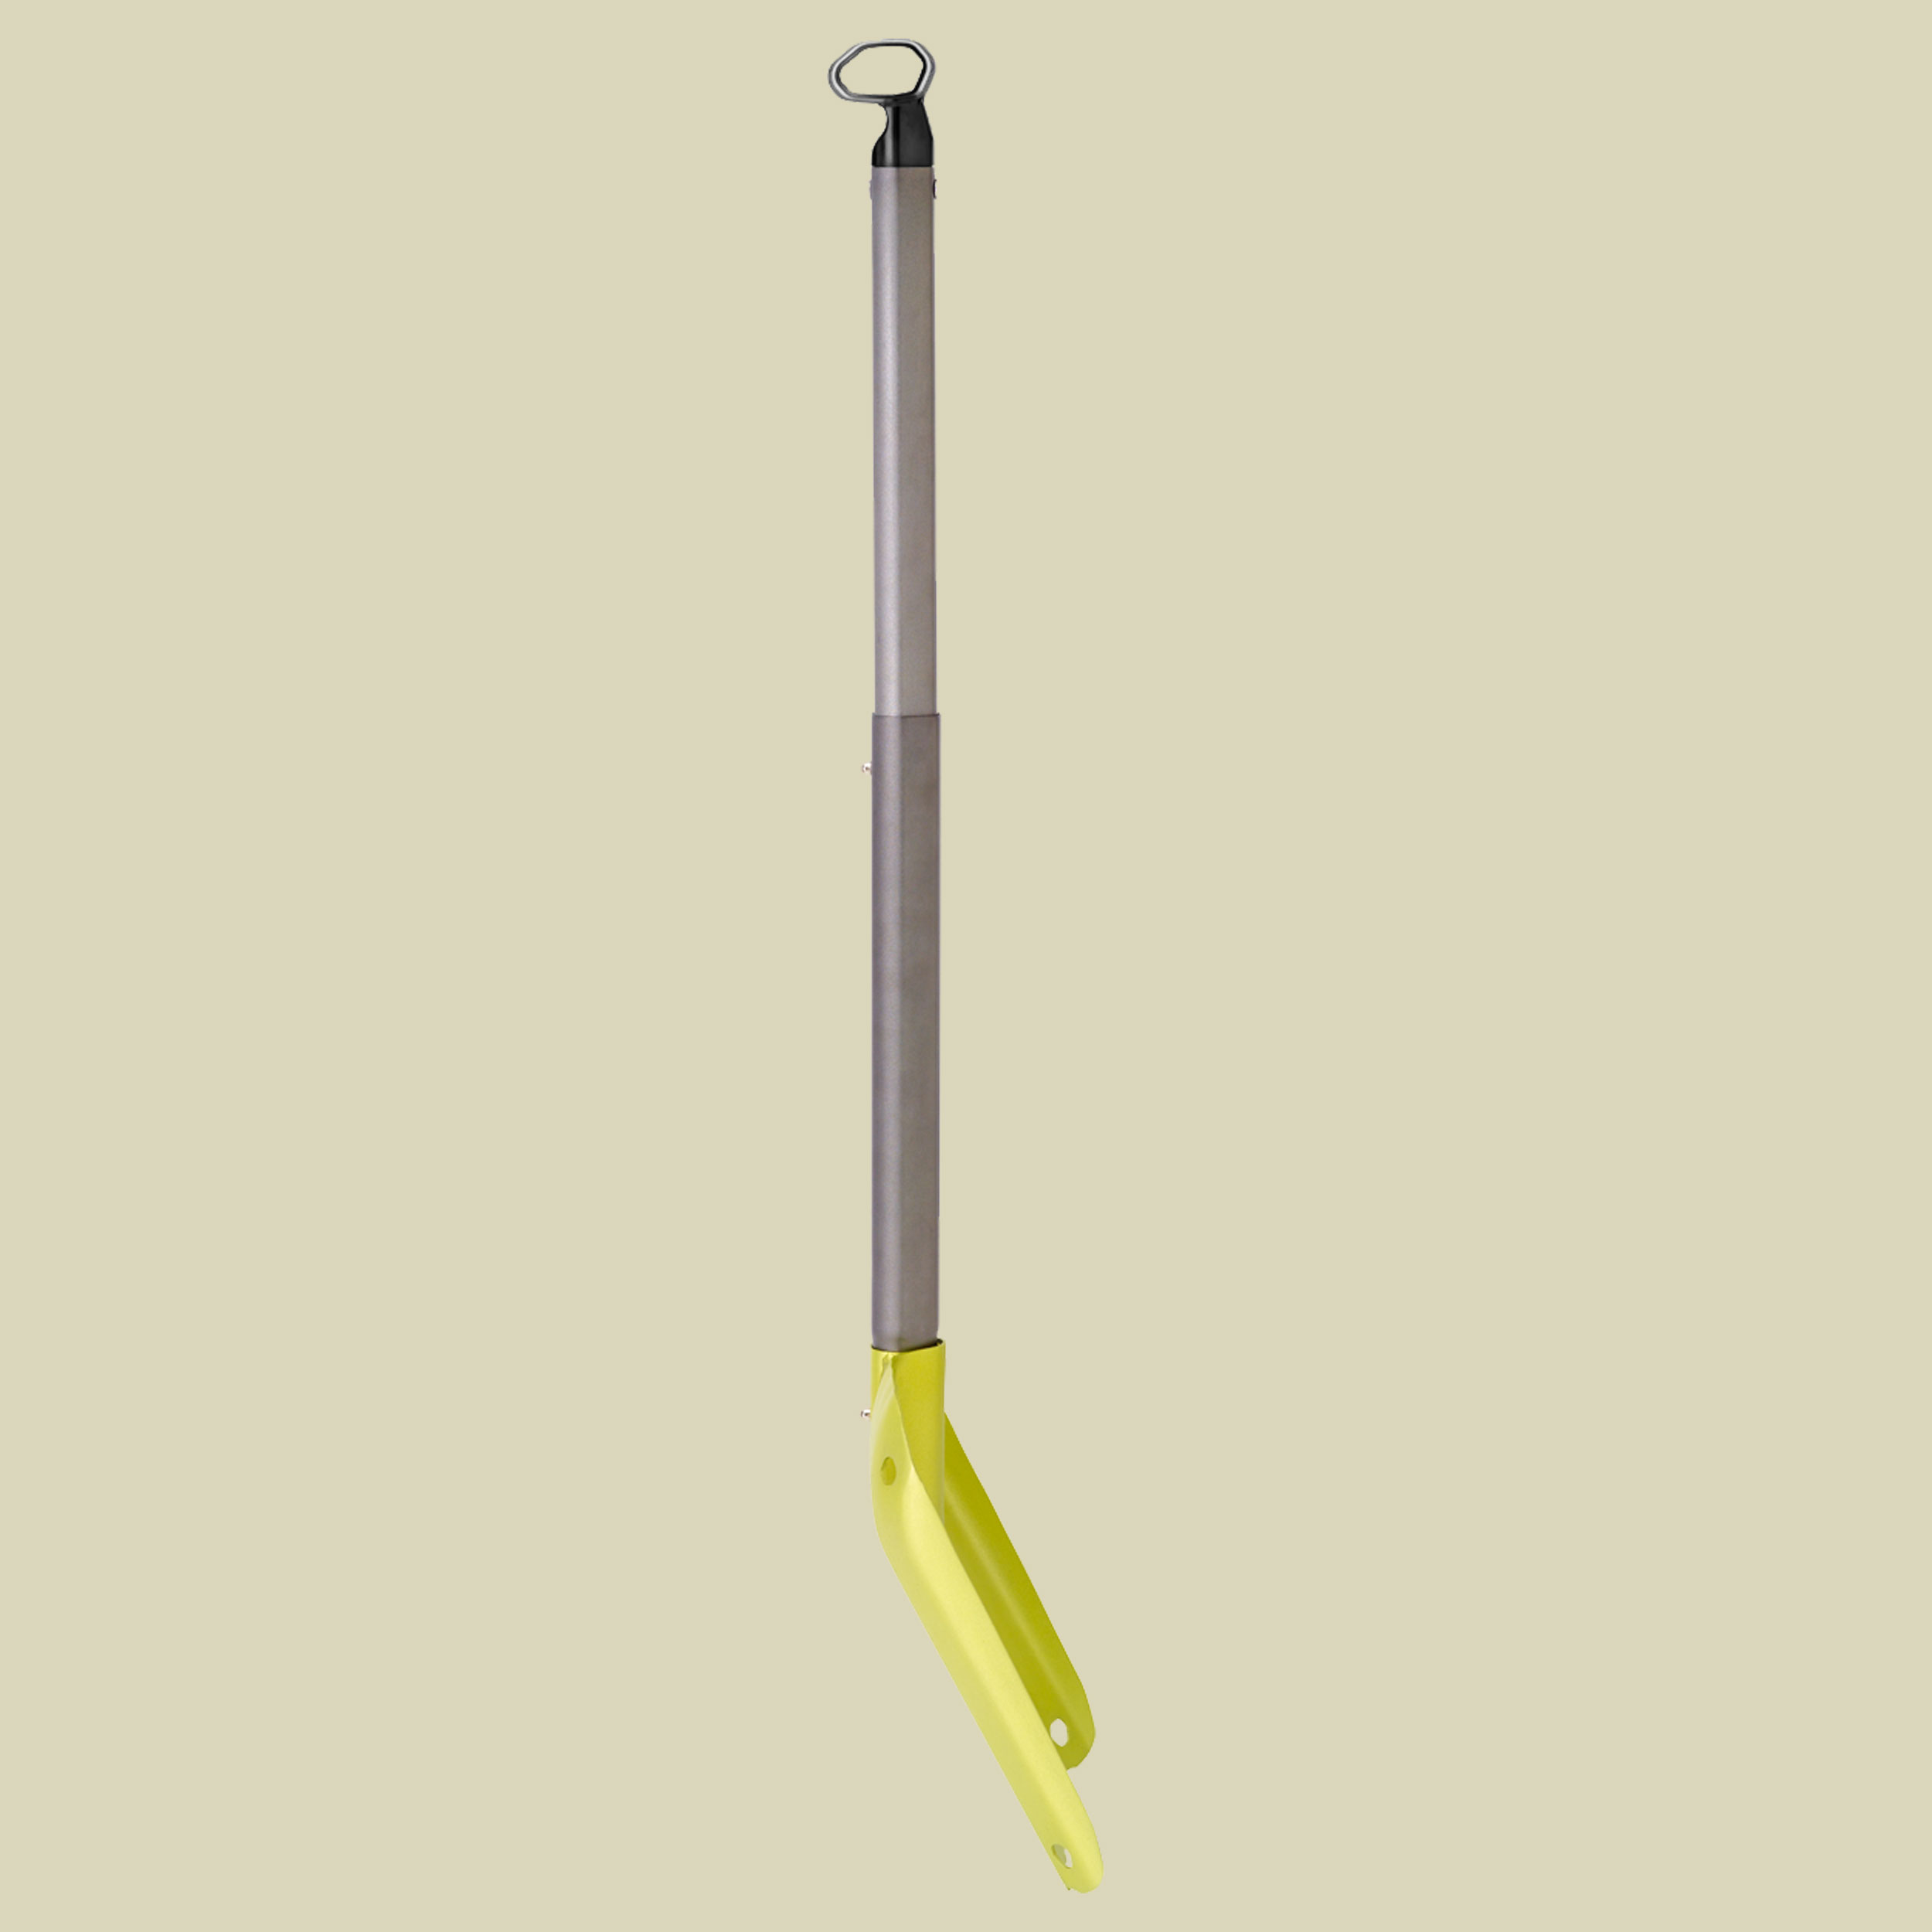 Responder Snow Shovel Länge 81 cm Farbe gelb